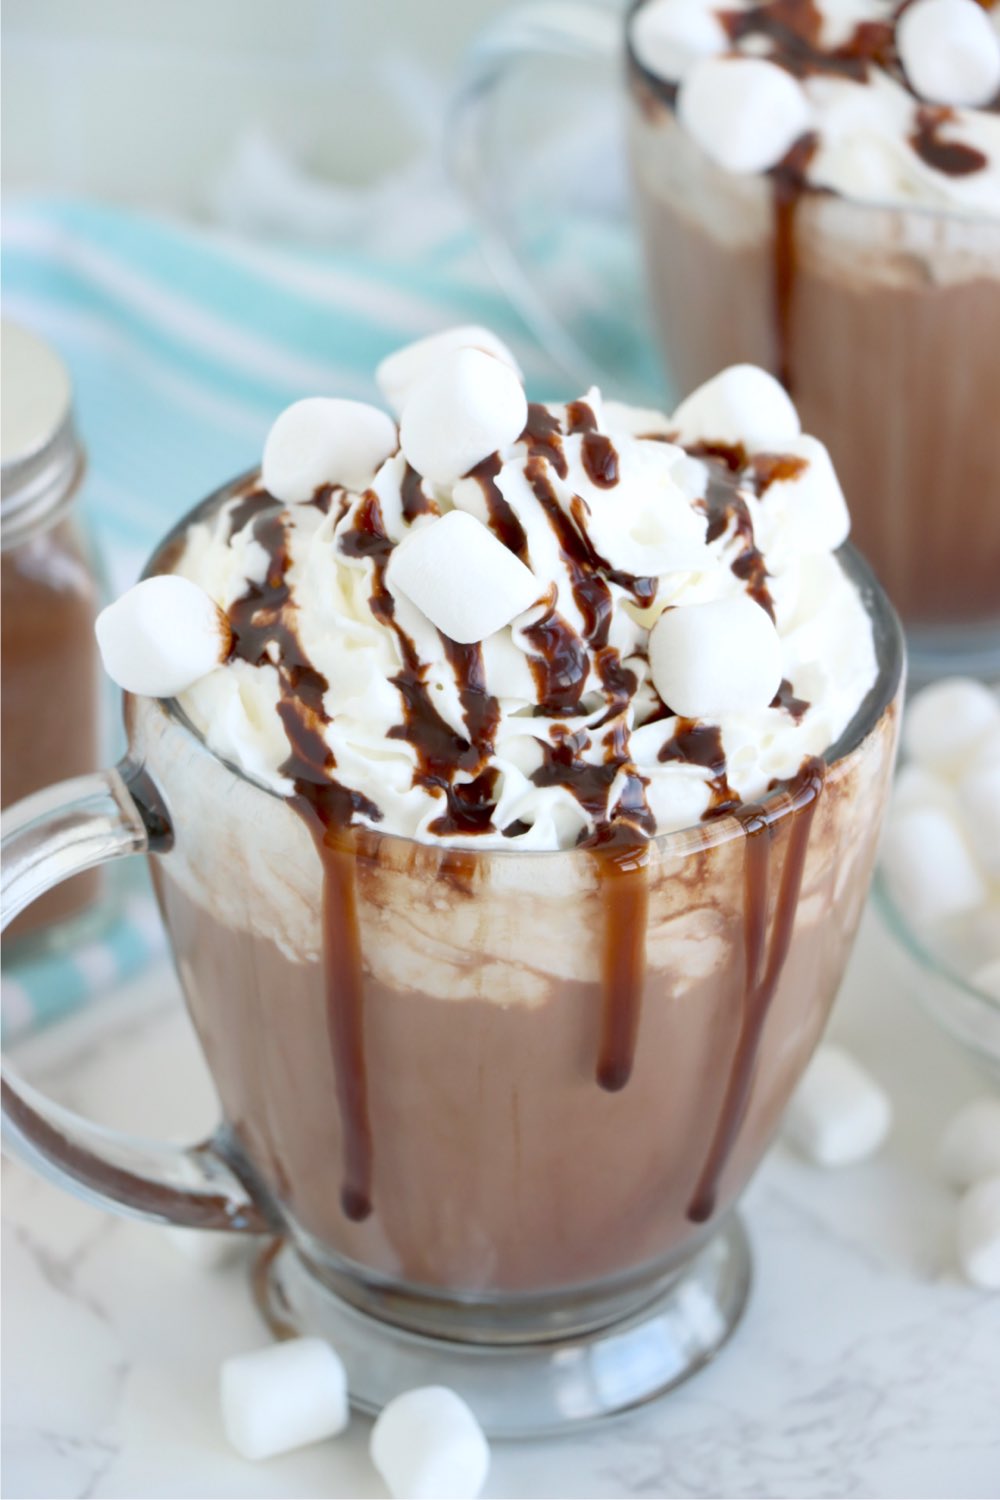 glass mug of hot chocolate with marshmallows and chocolate syrup